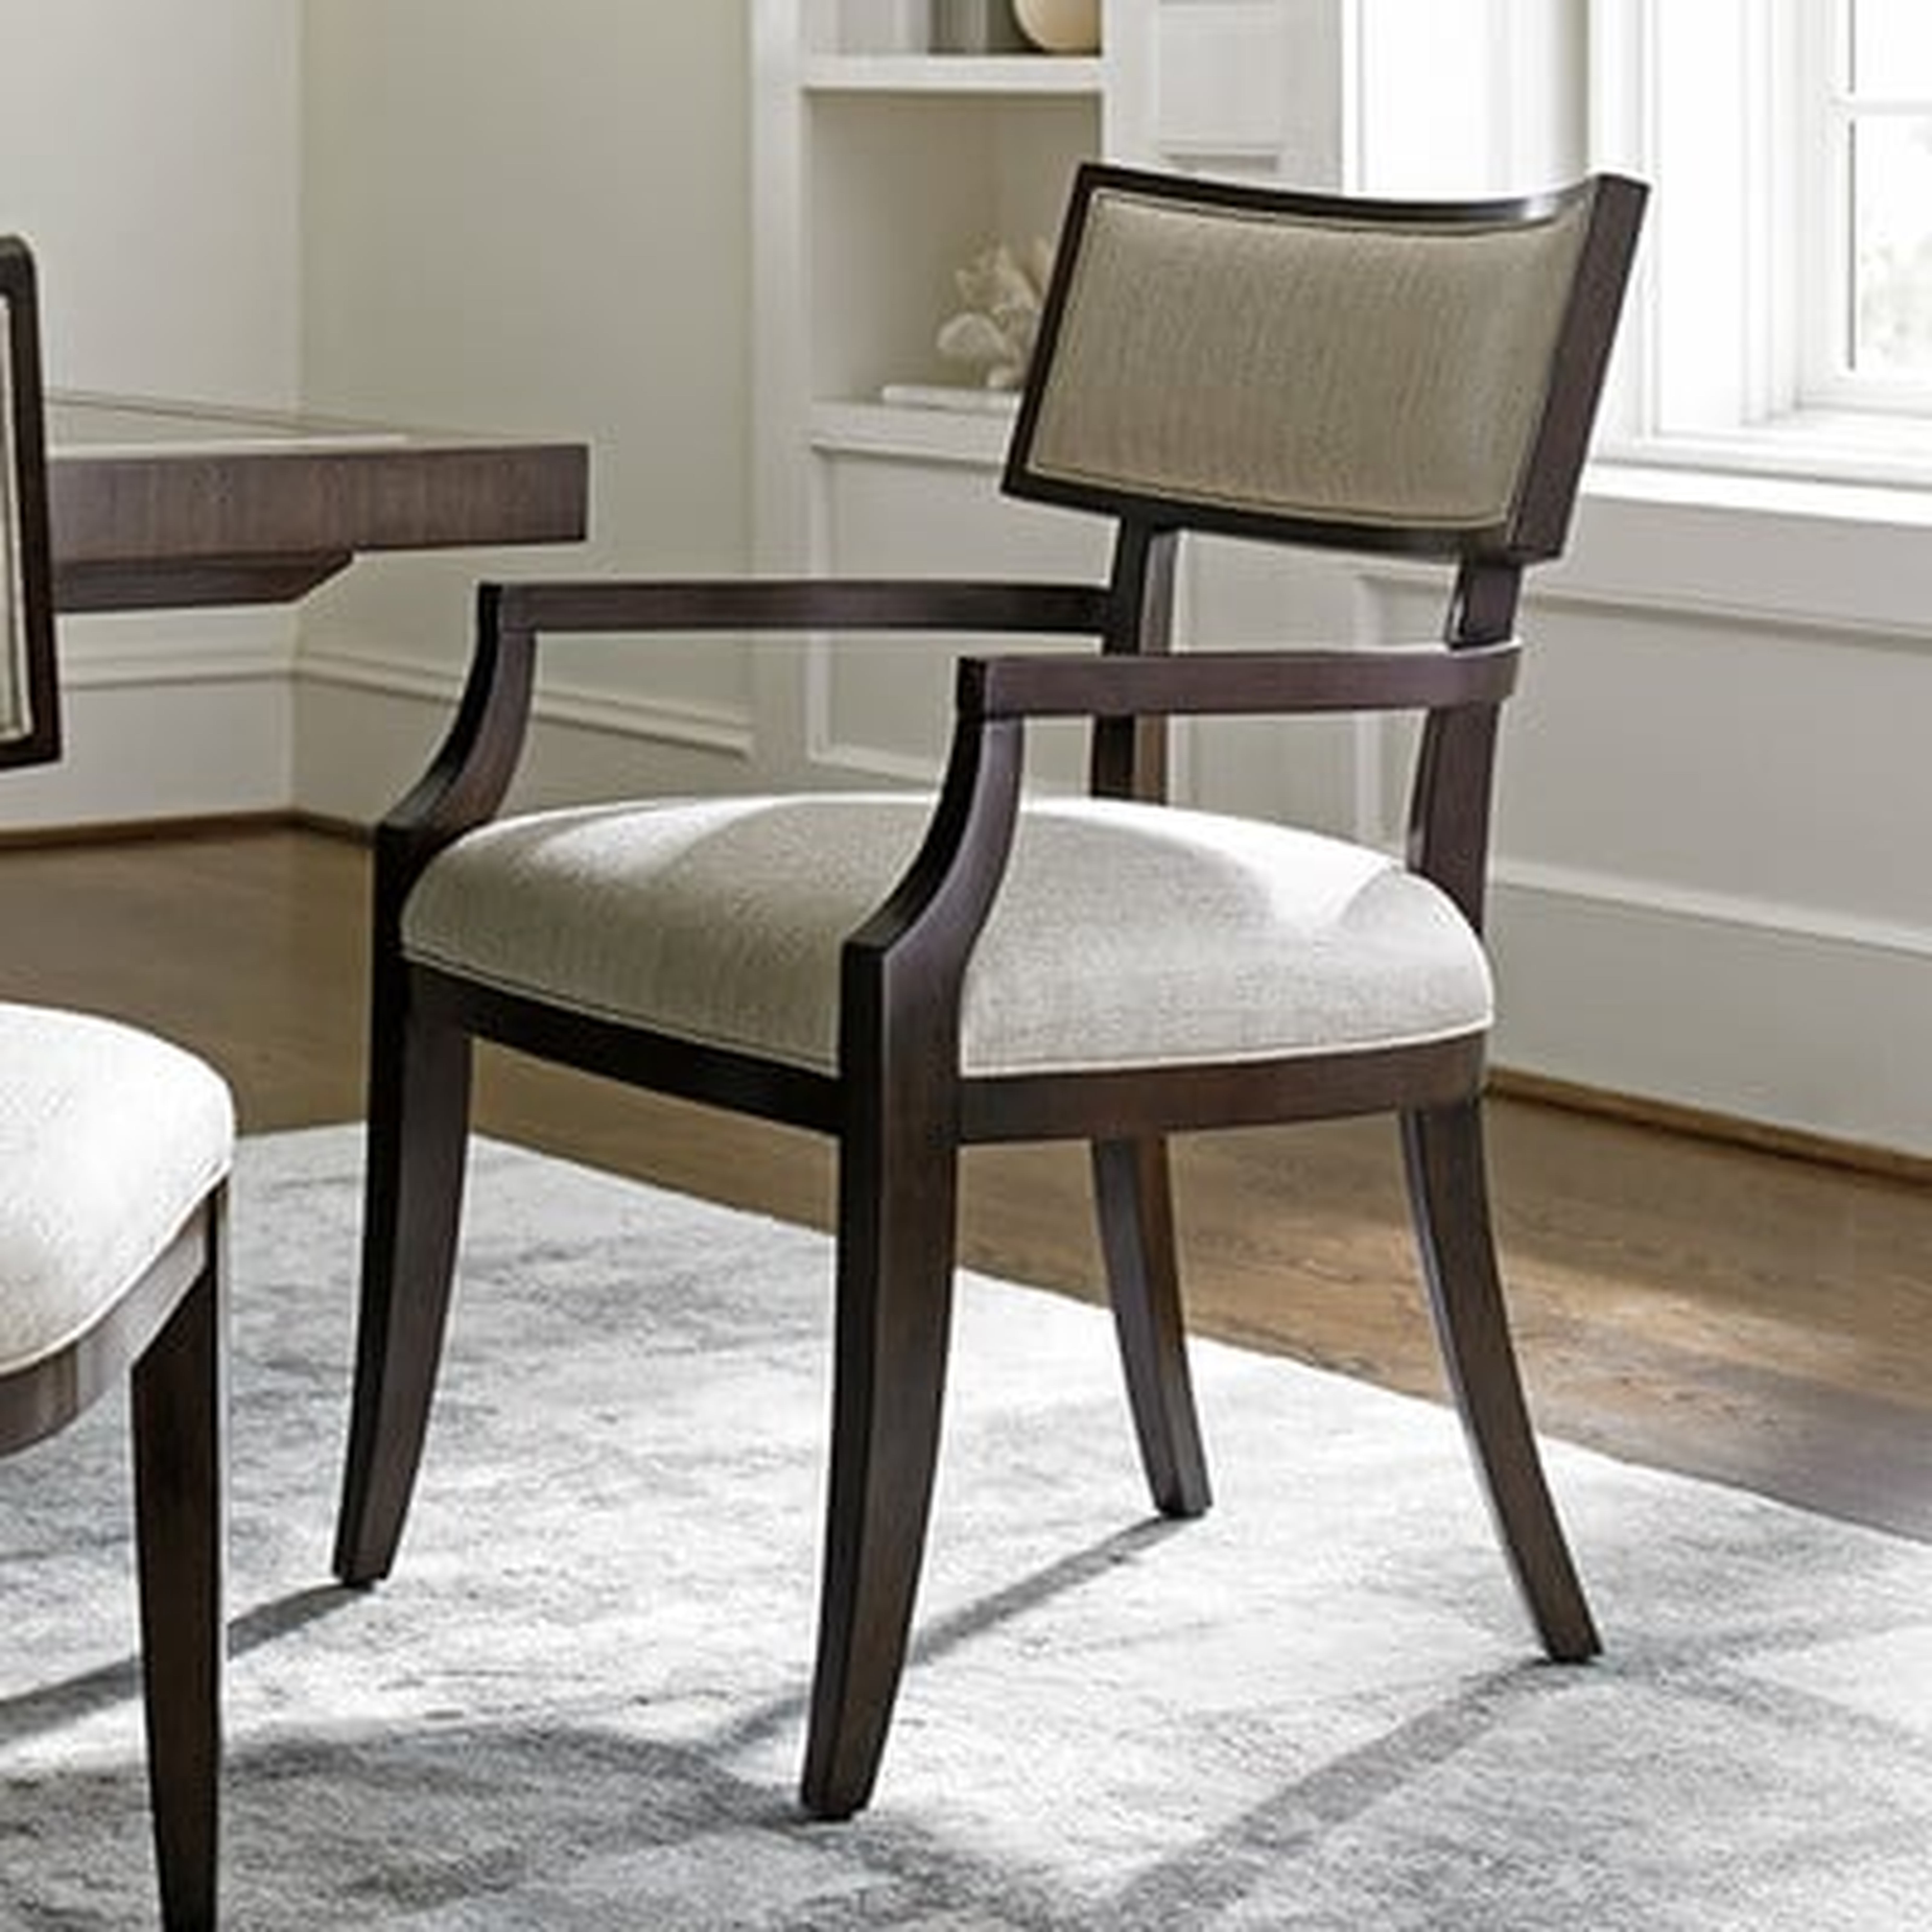 MacArthur Park Whittier Upholstered Dining Chair - Wayfair